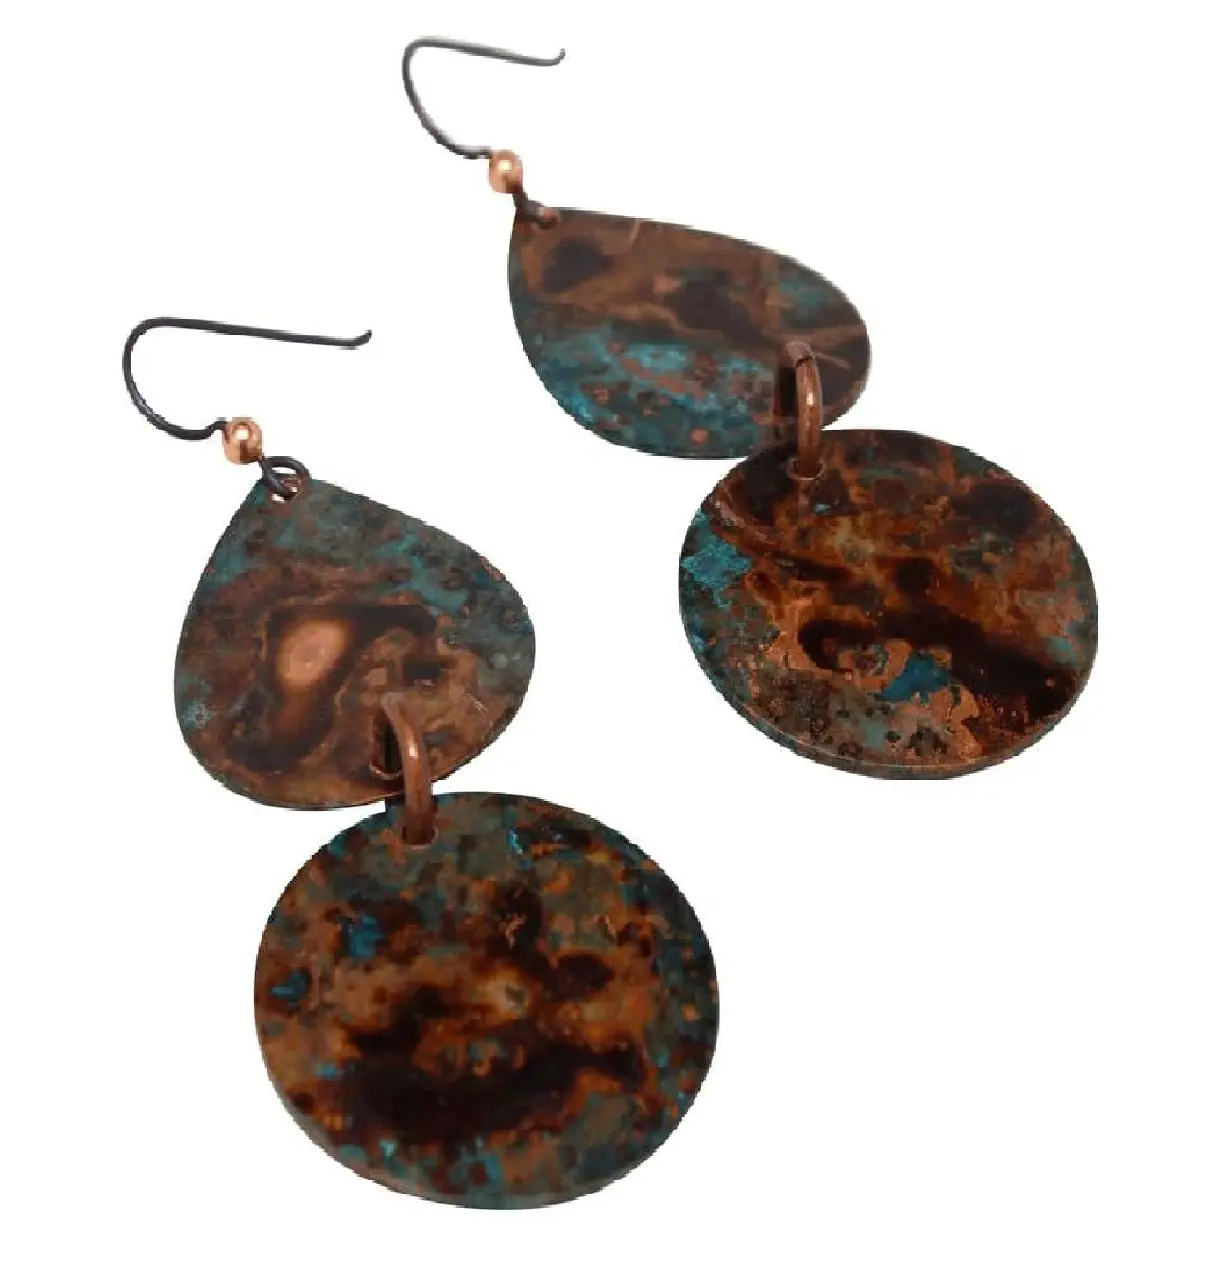 Rrival ubai-arnillo de cobre antiguo, pendientes ridal ewelry